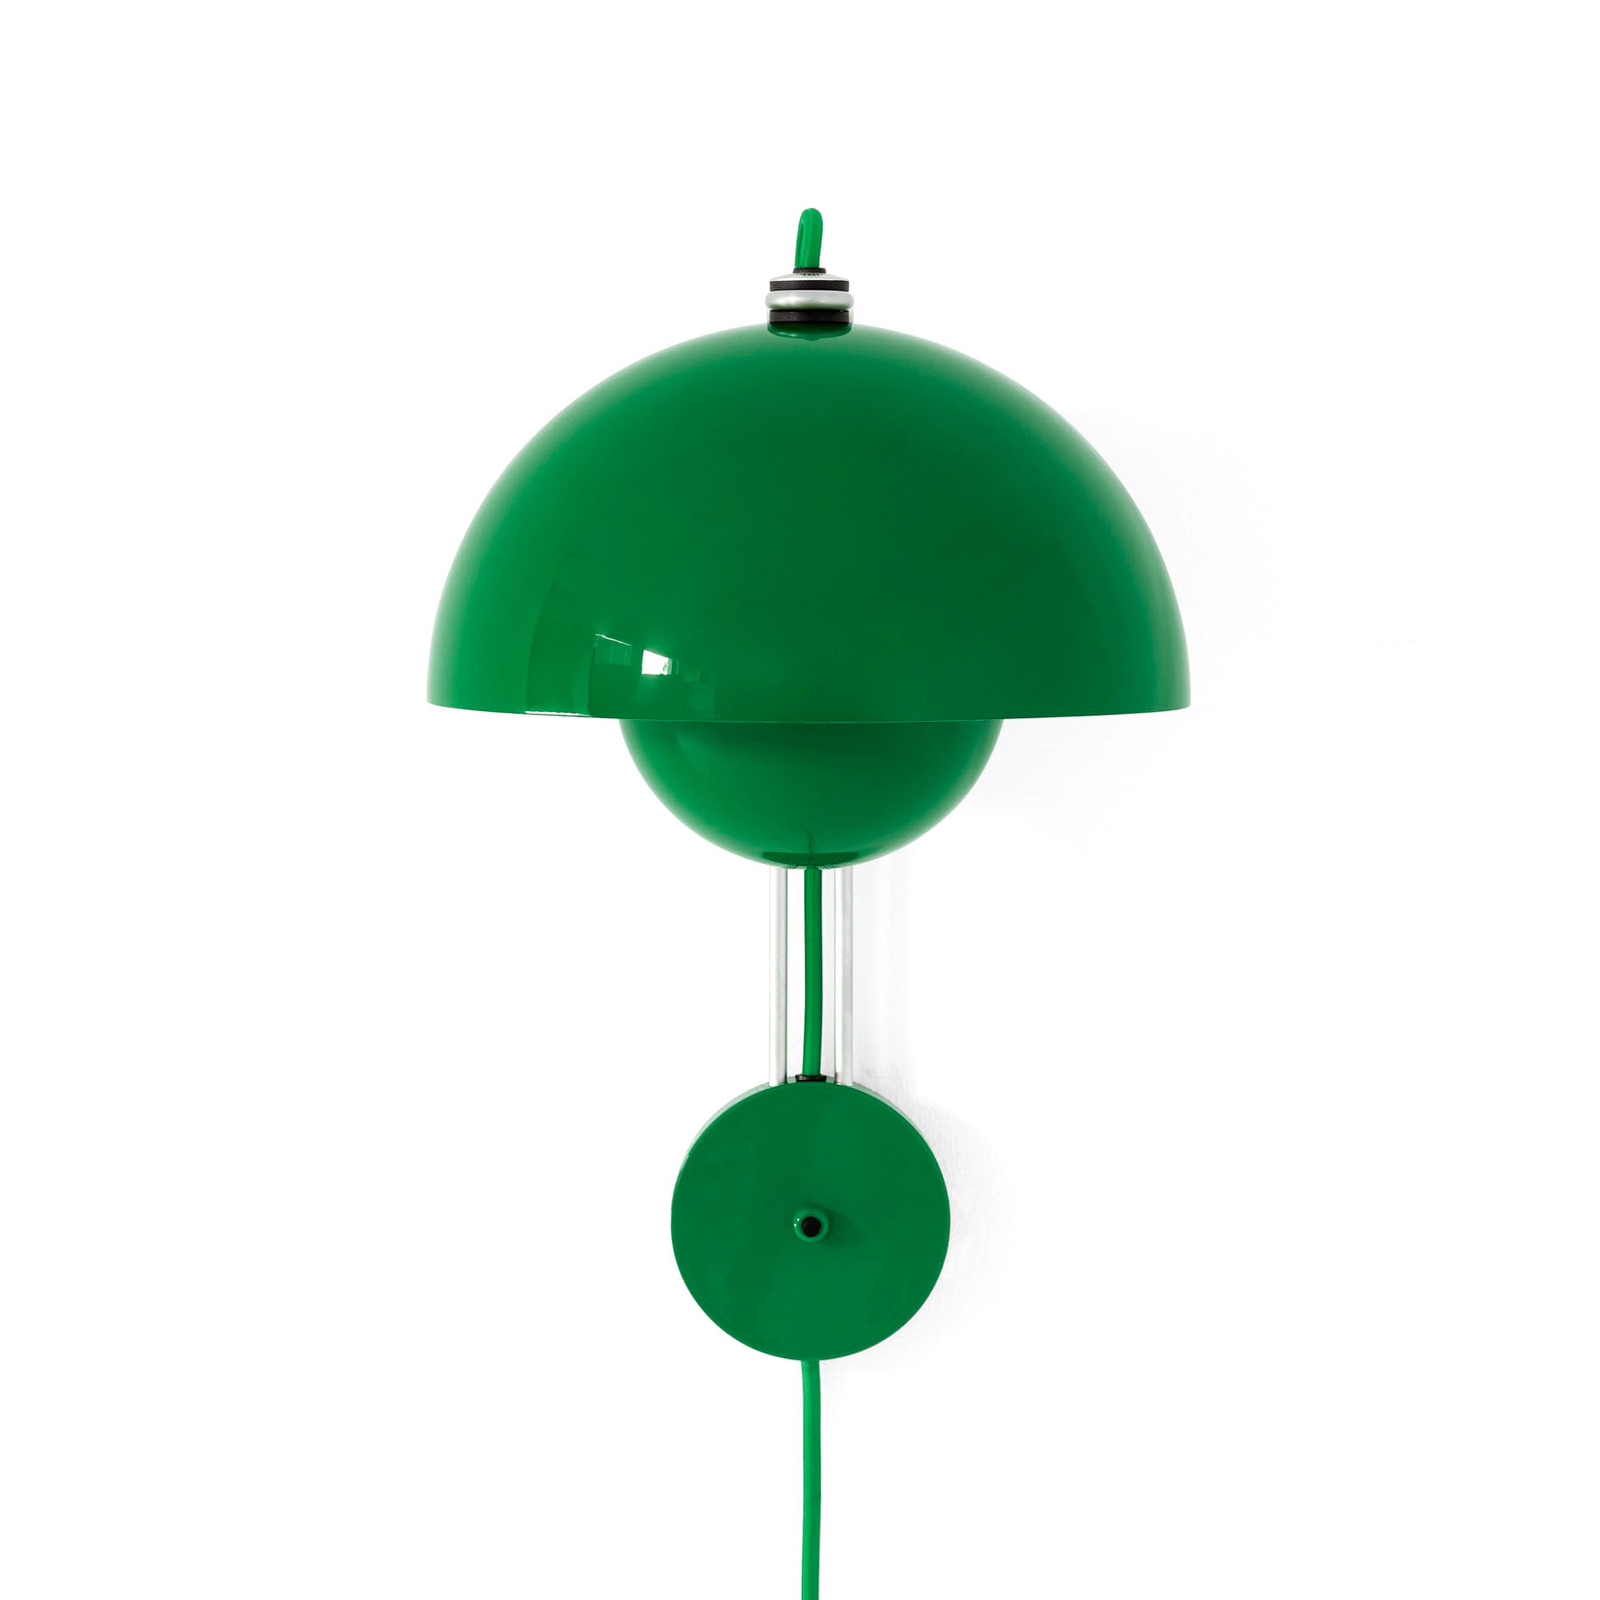 &Tradičné nástenné svietidlo Flowerpot VP8, zástrčka, signálna zelená